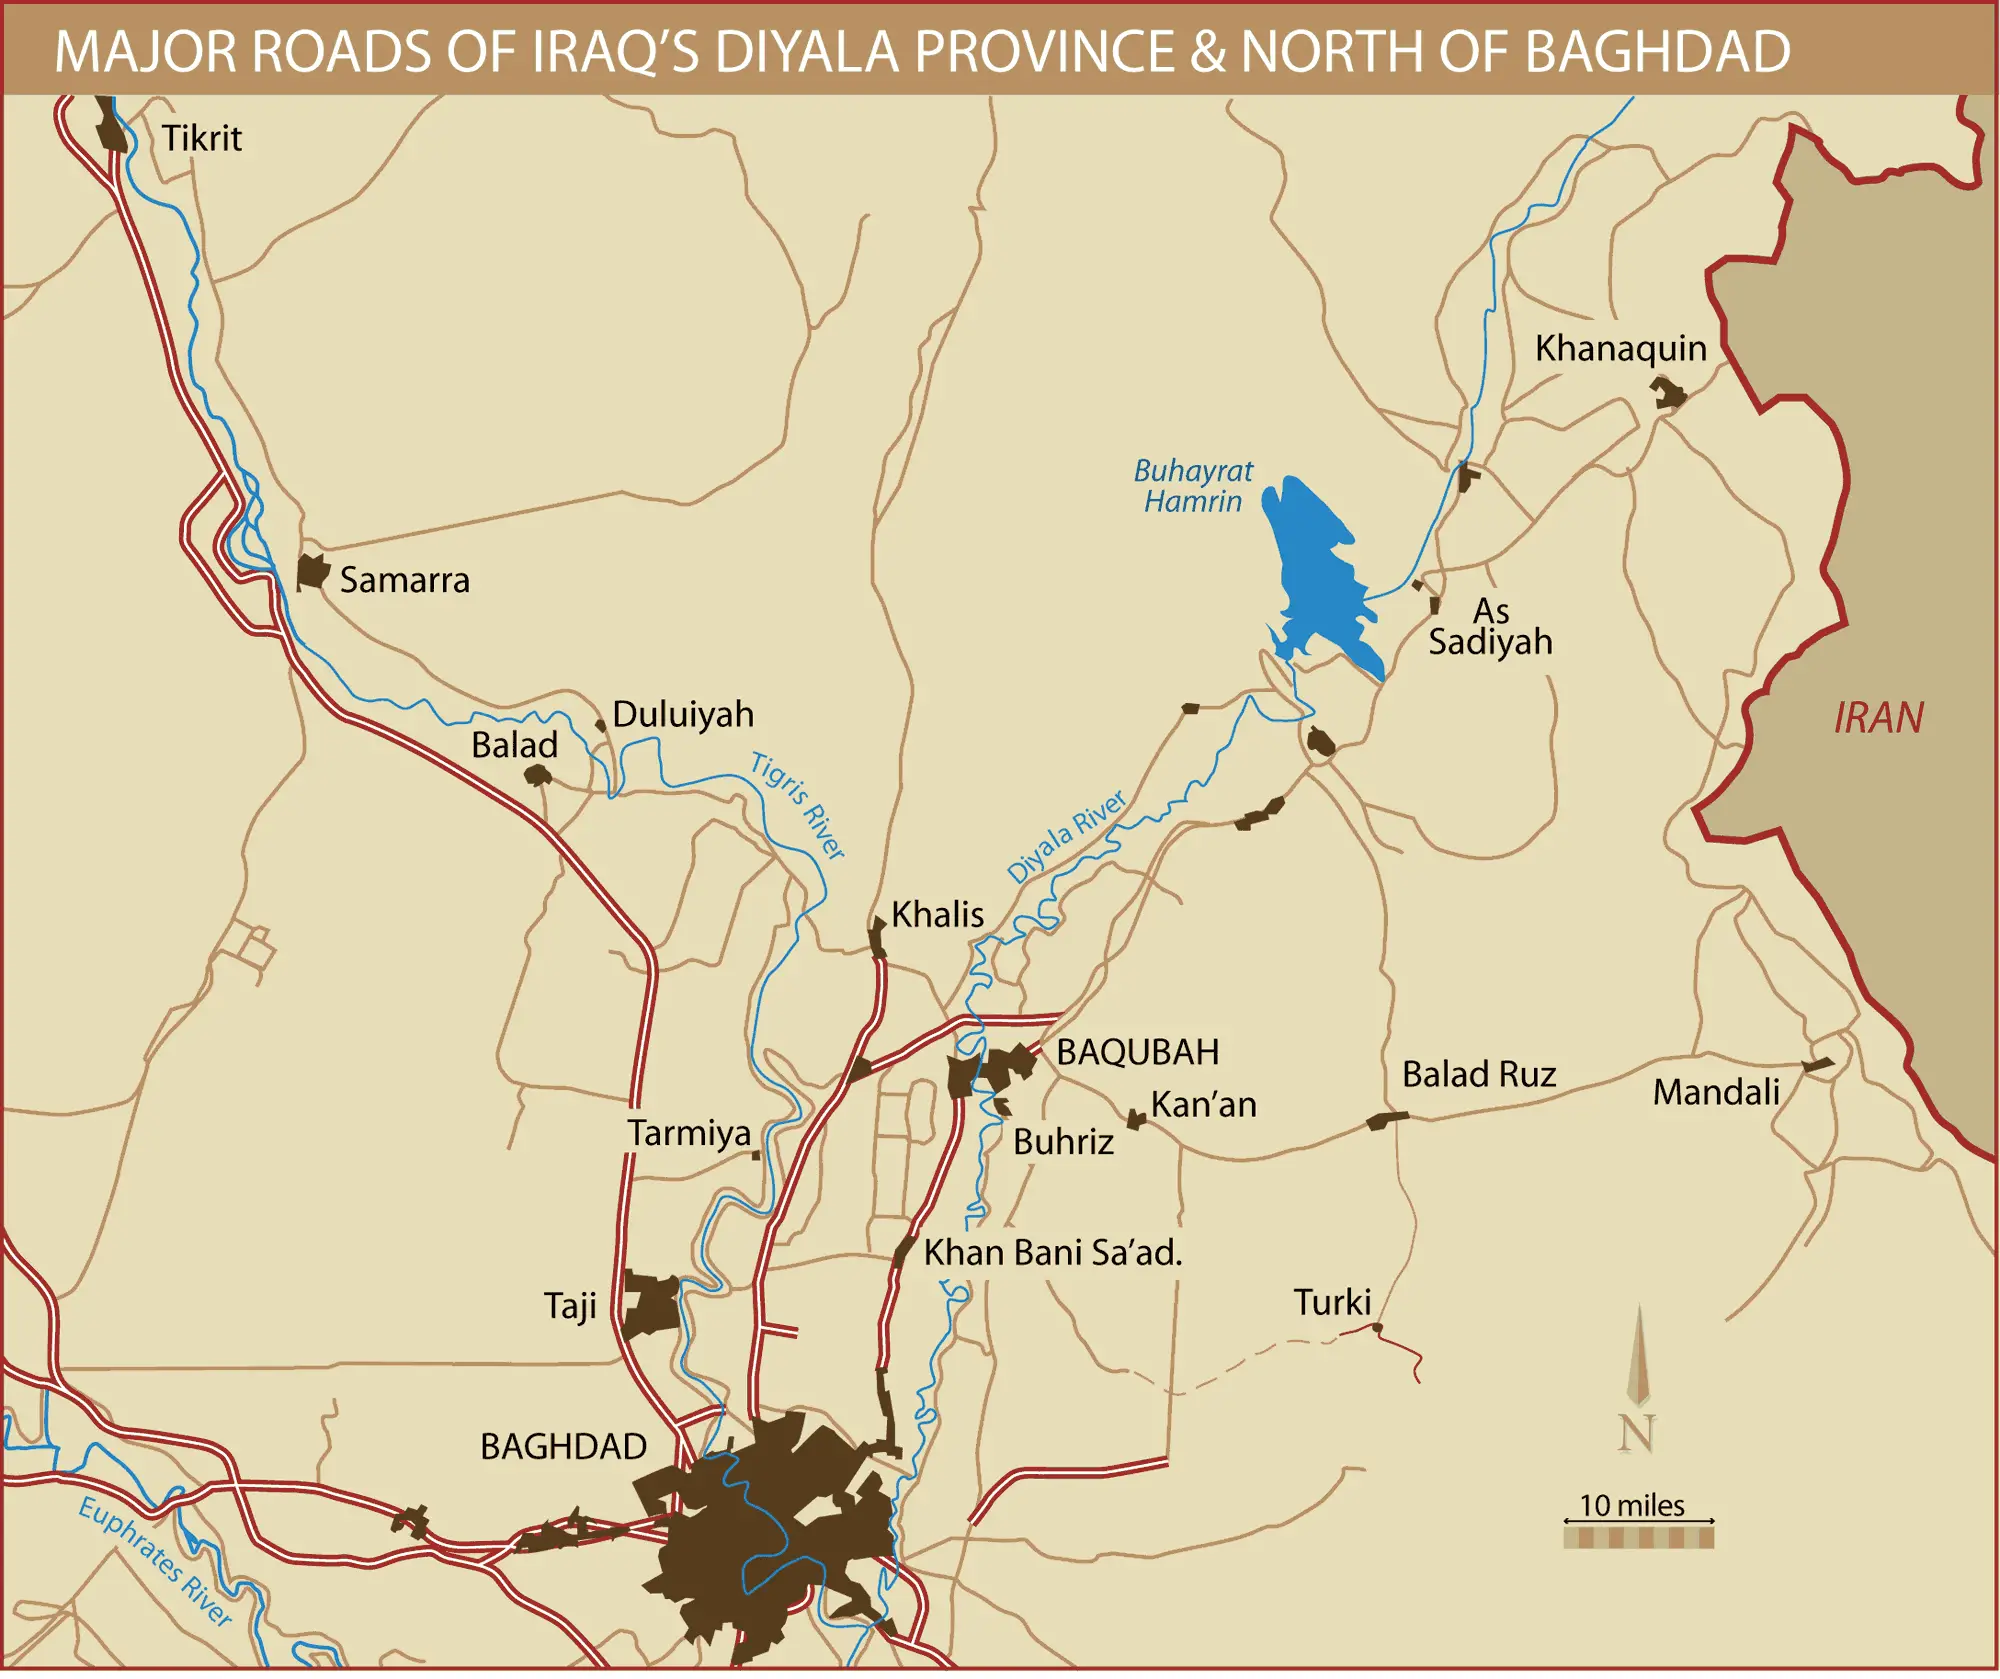 Northern Baghdad And Diyala Province Roads